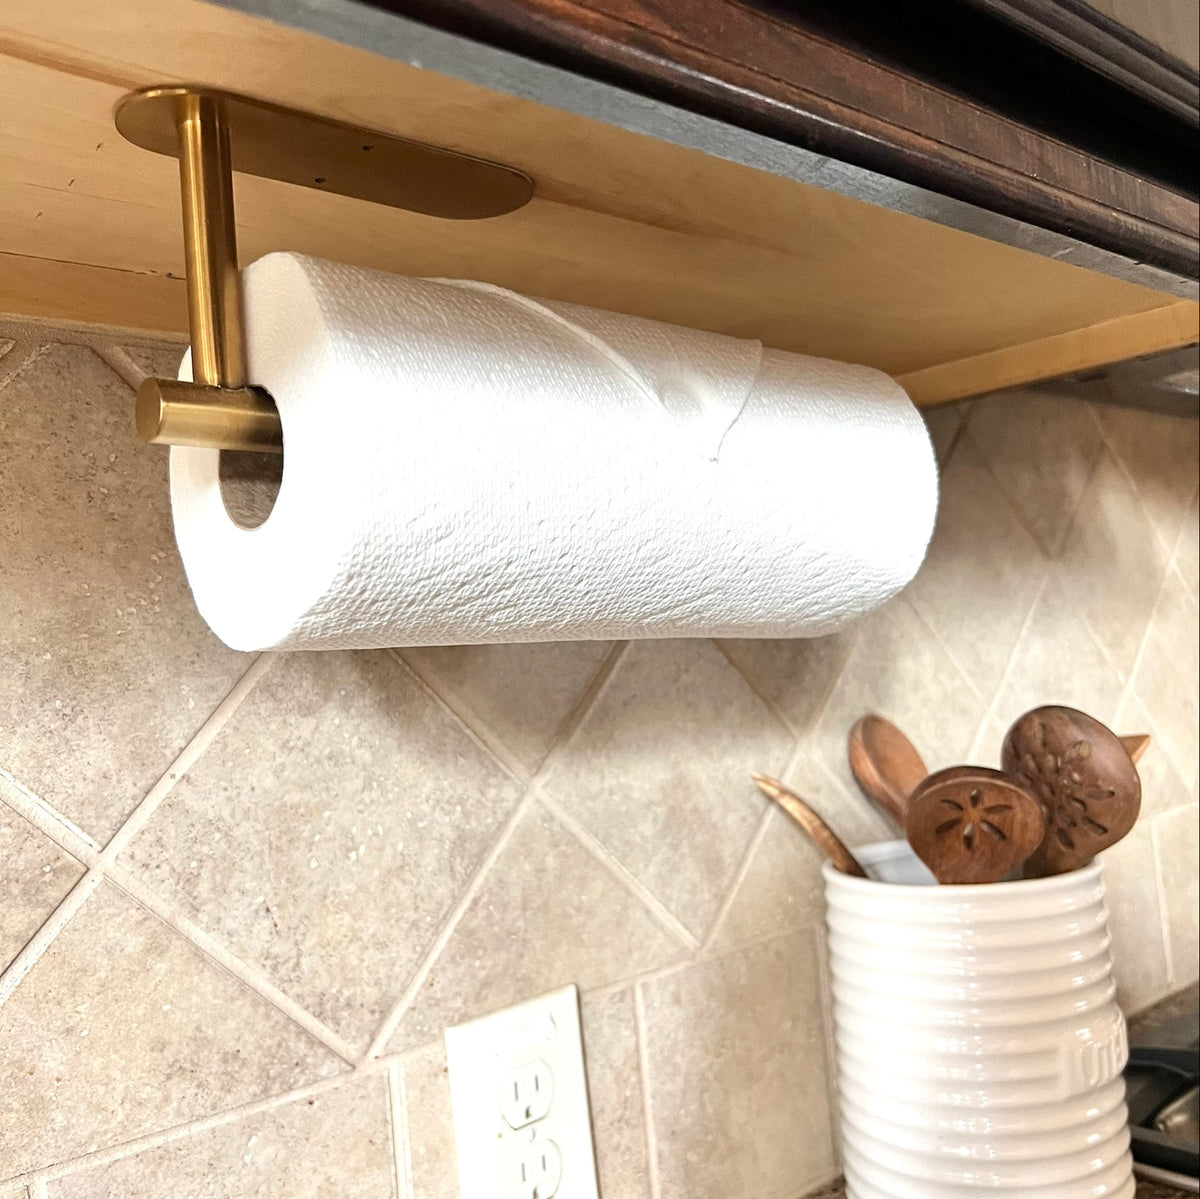 SimplyTear Paper Towel Holder